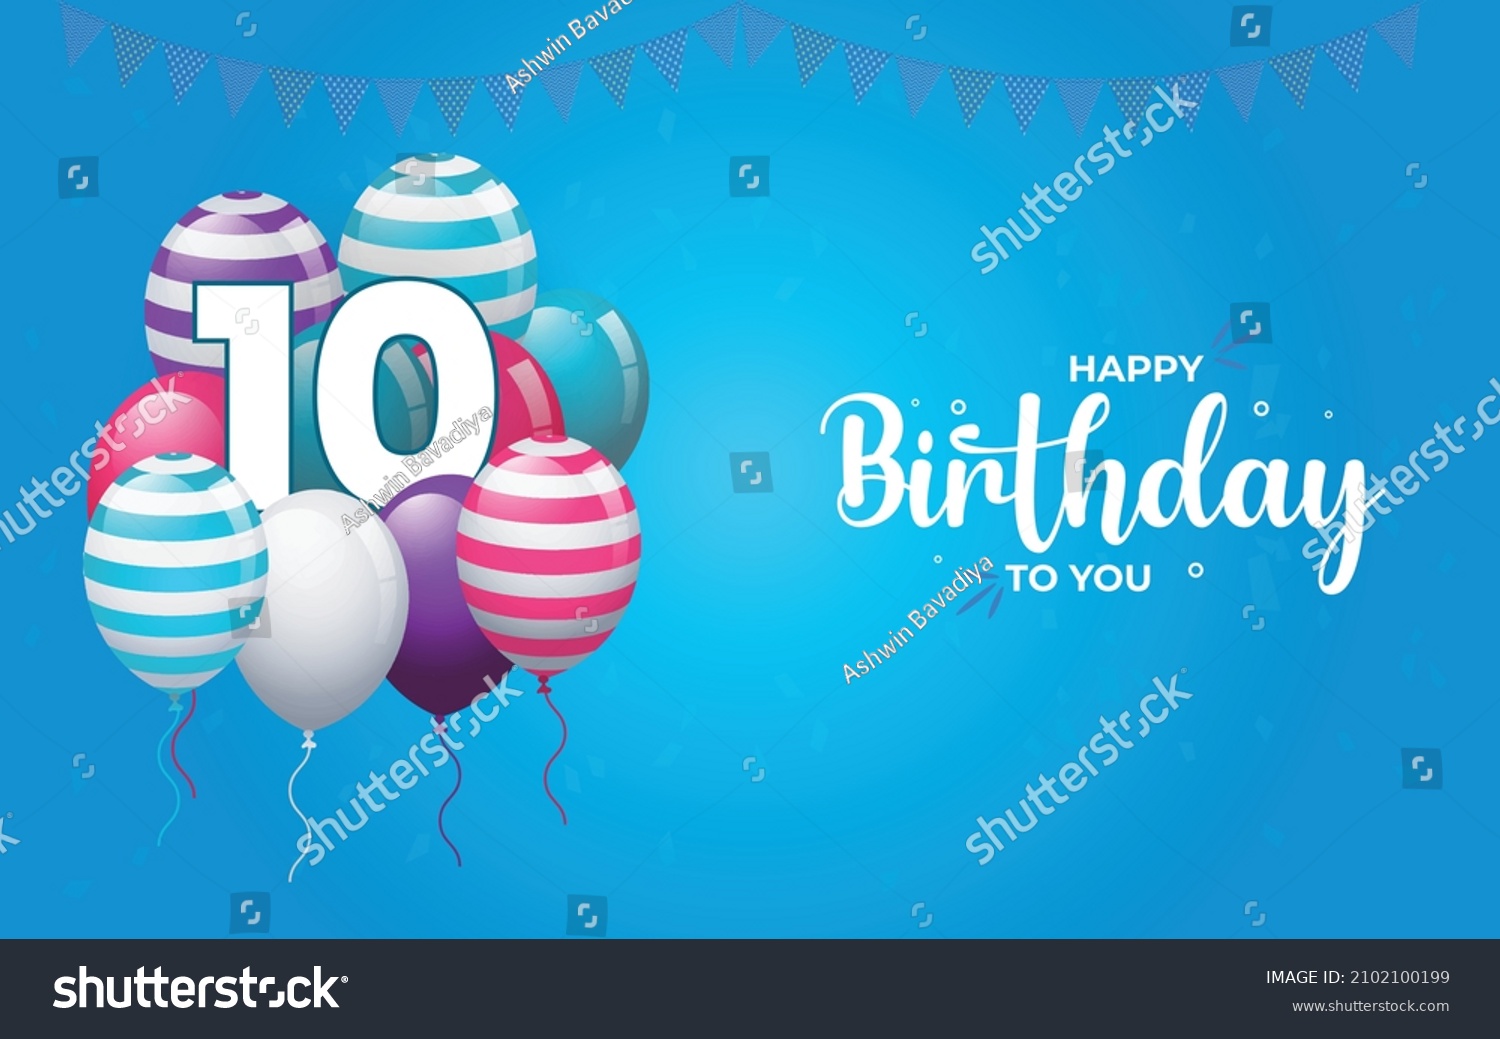 Happy 10 Birthday Greeting Card Vector Stock Vector (Royalty Free ...